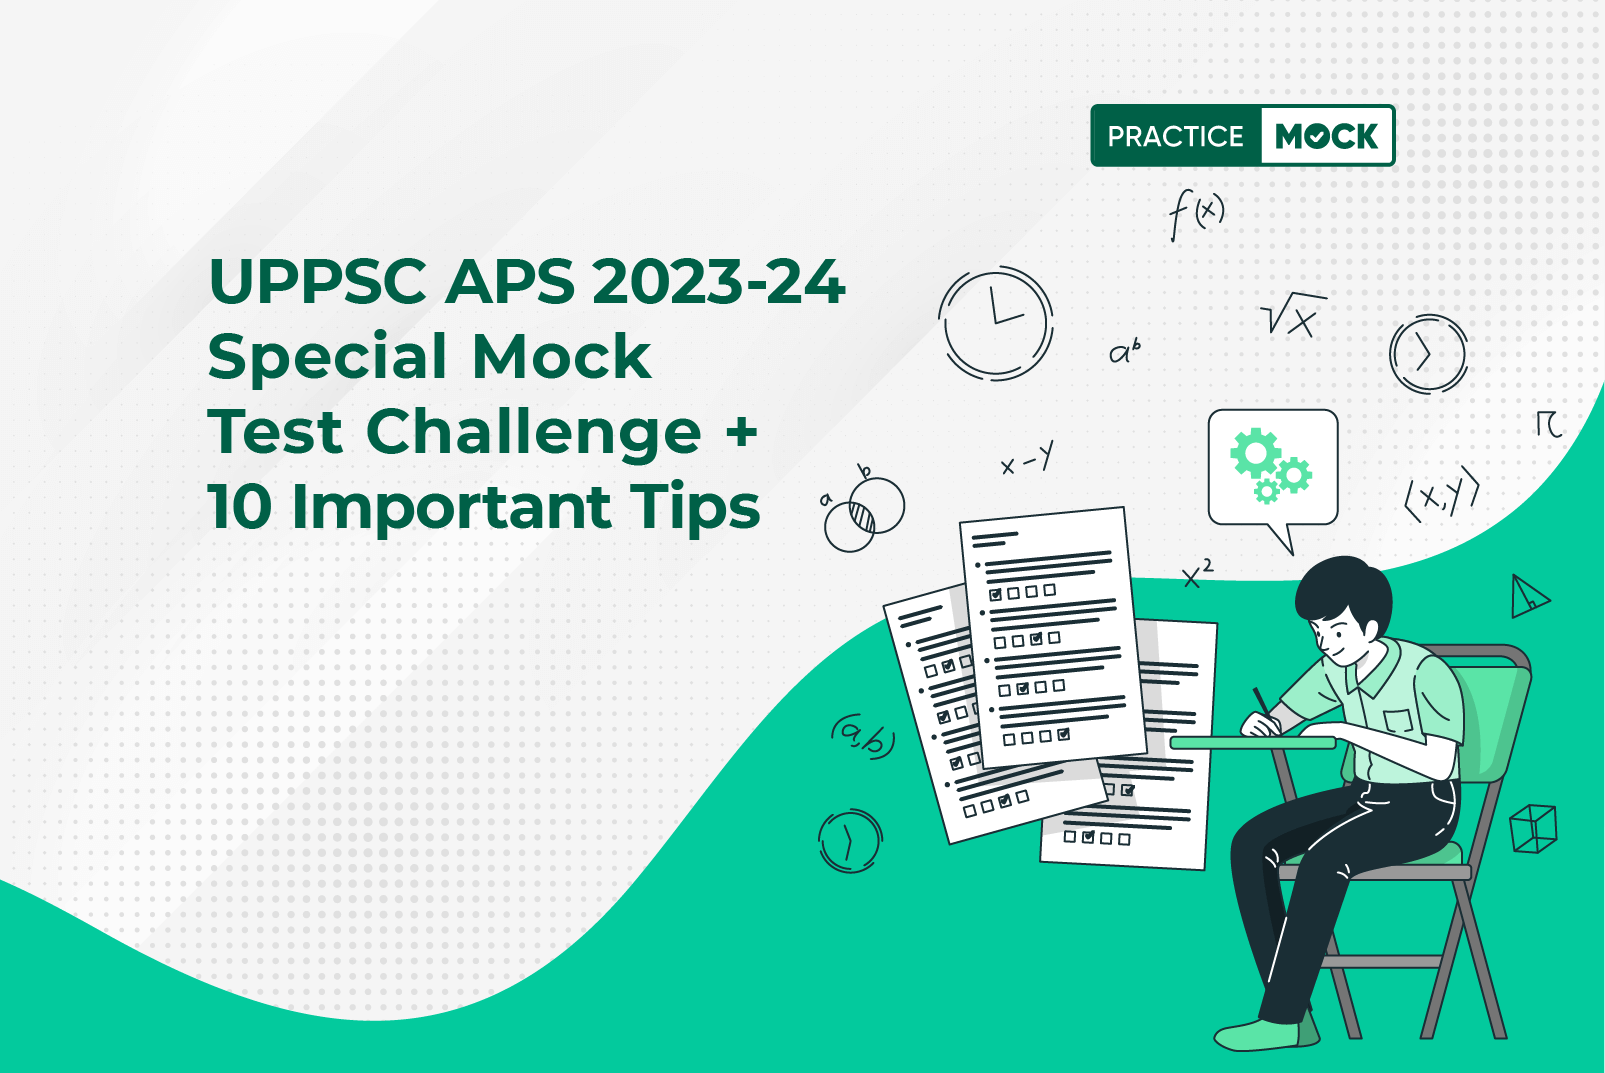 UPPSC APS 2023-24 Special Mock Test Challenge + 10 Important Tips